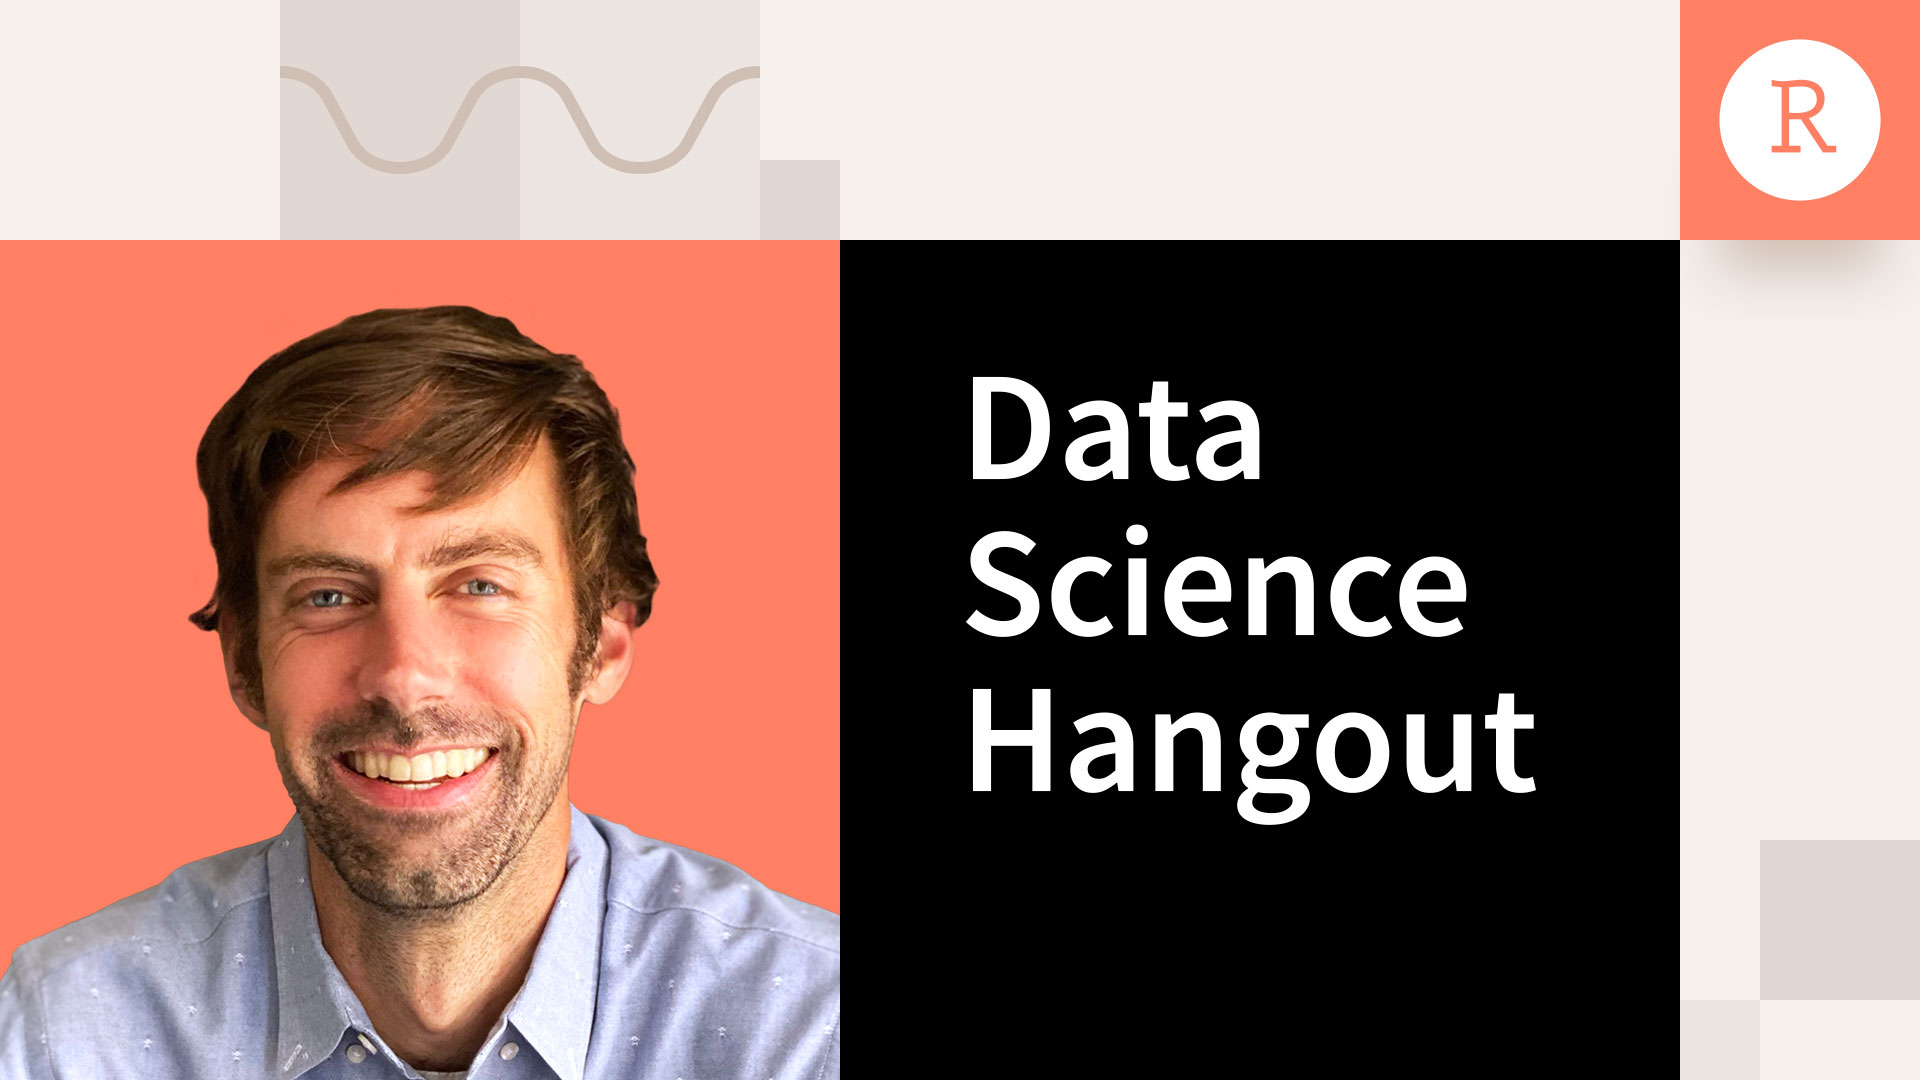 Data Science Hangout with Frank Corrigan